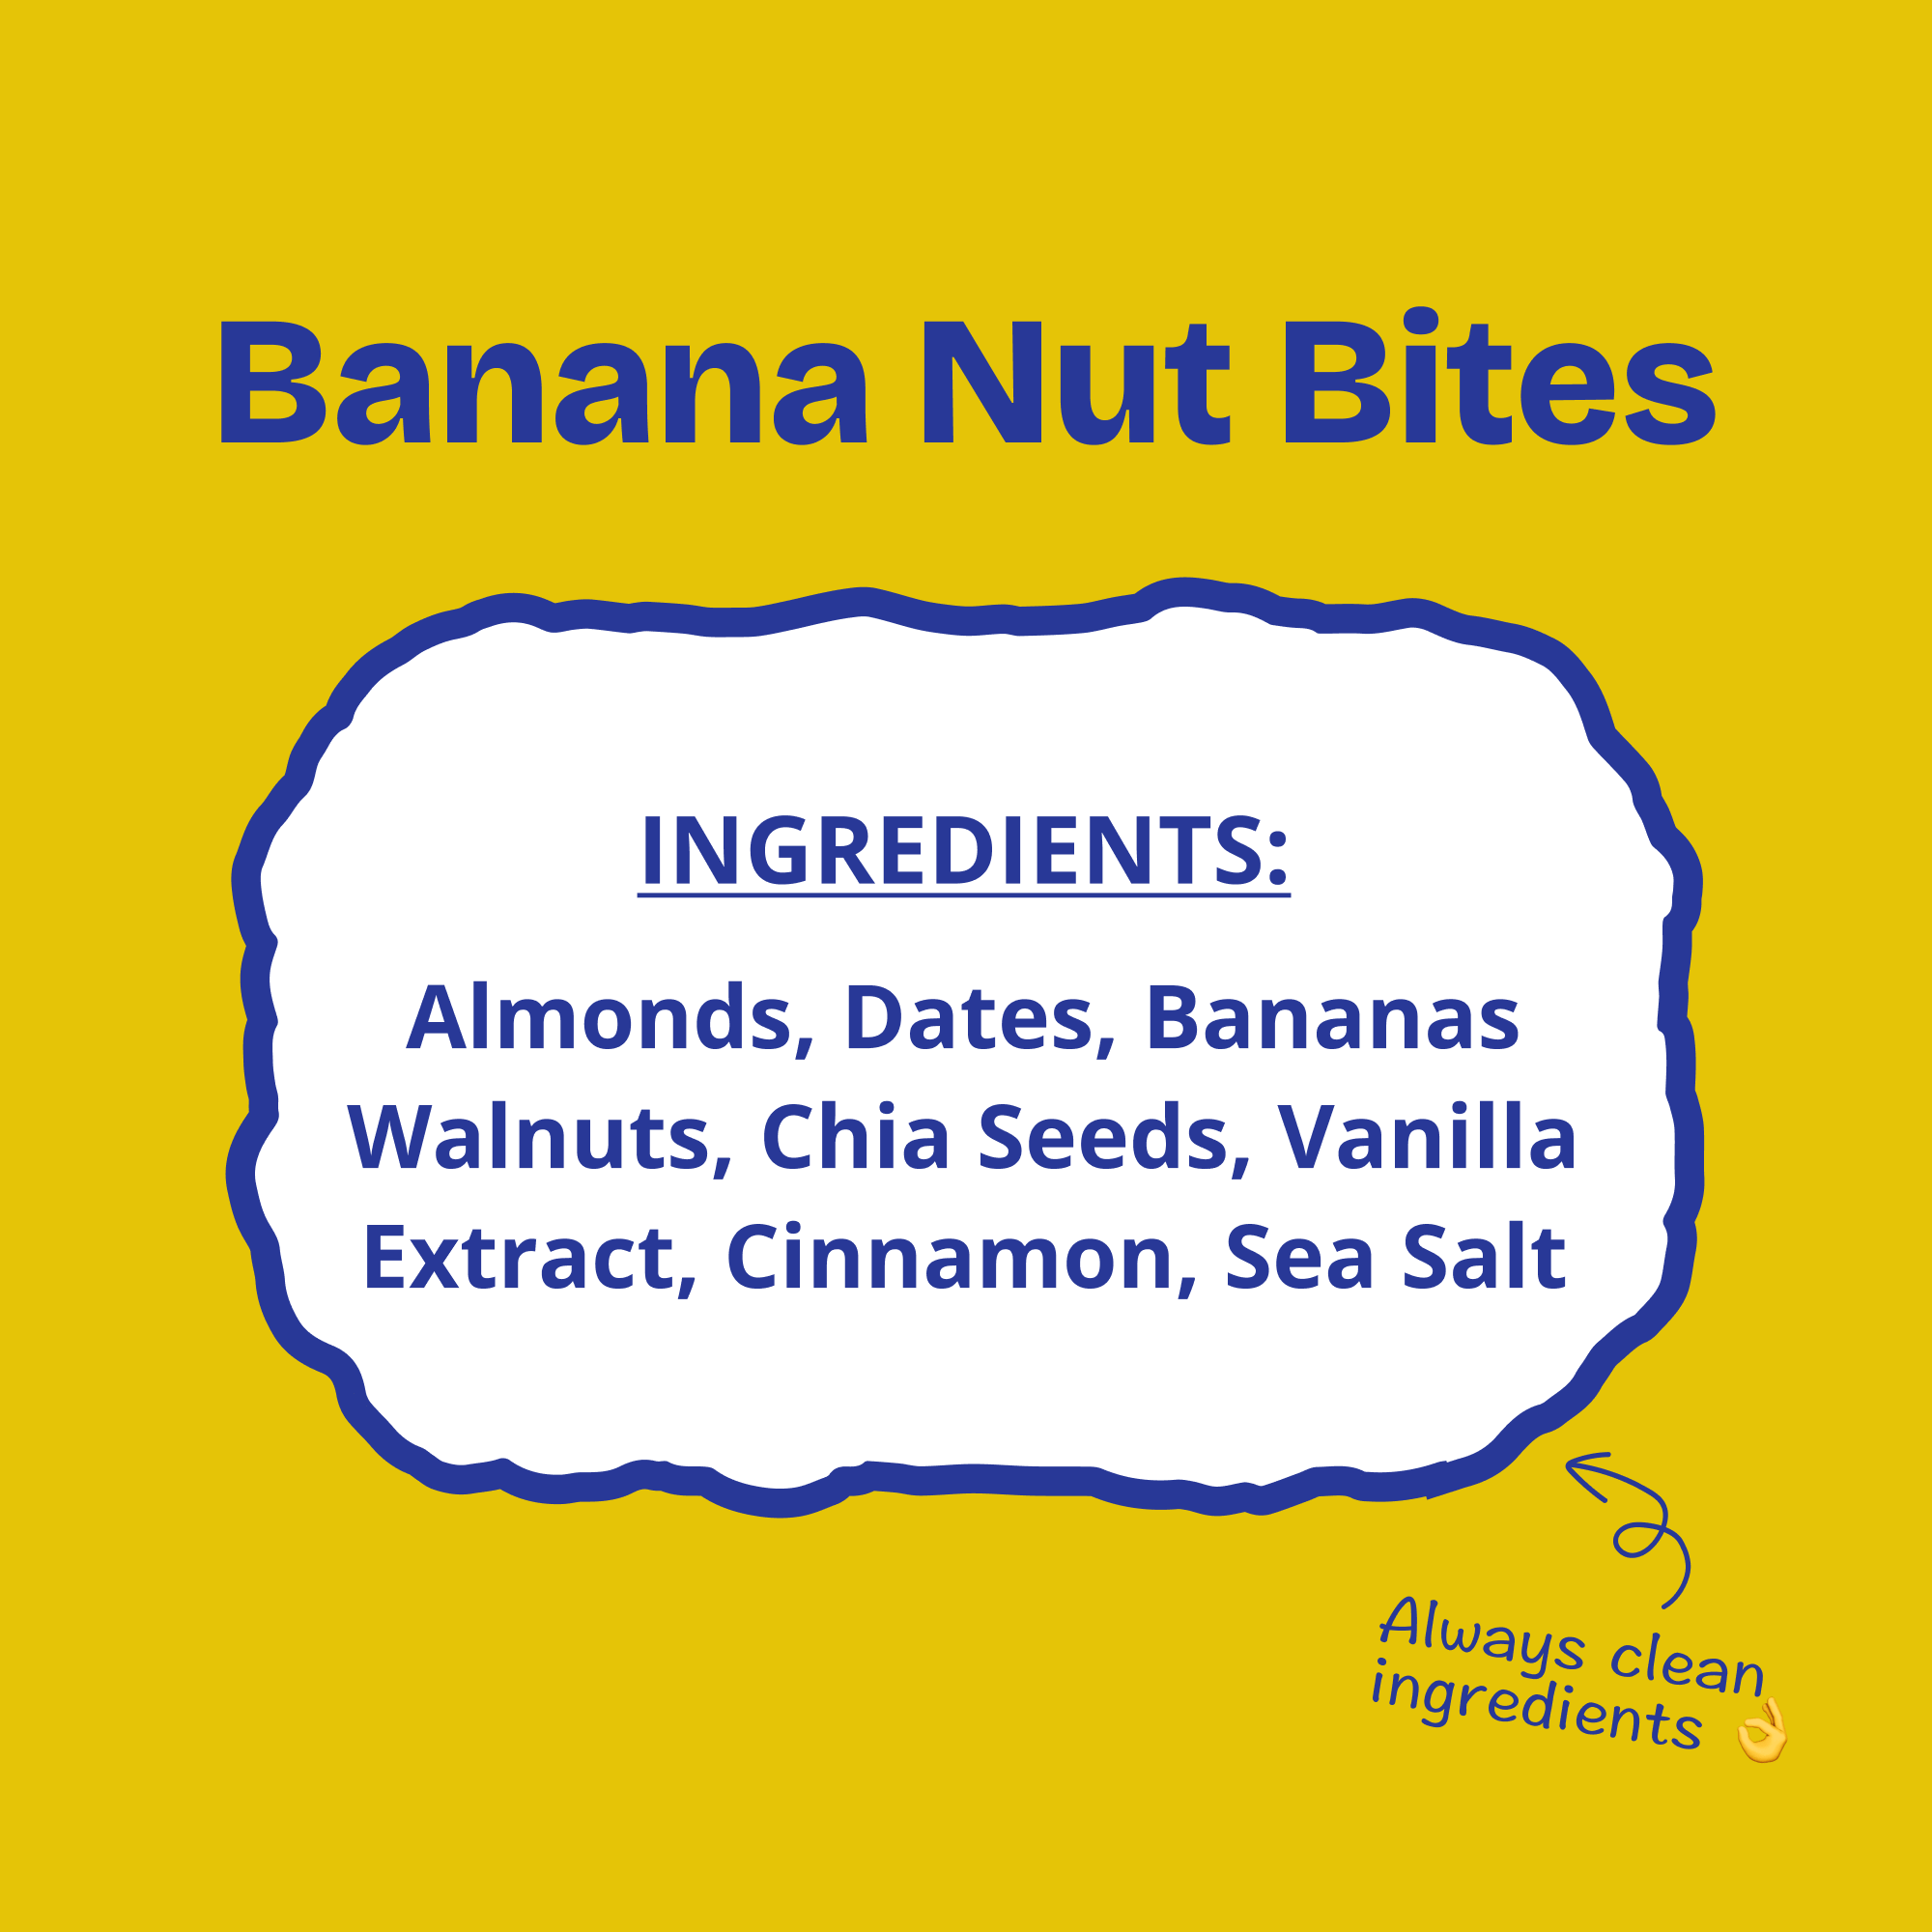 Banana Nut Bites